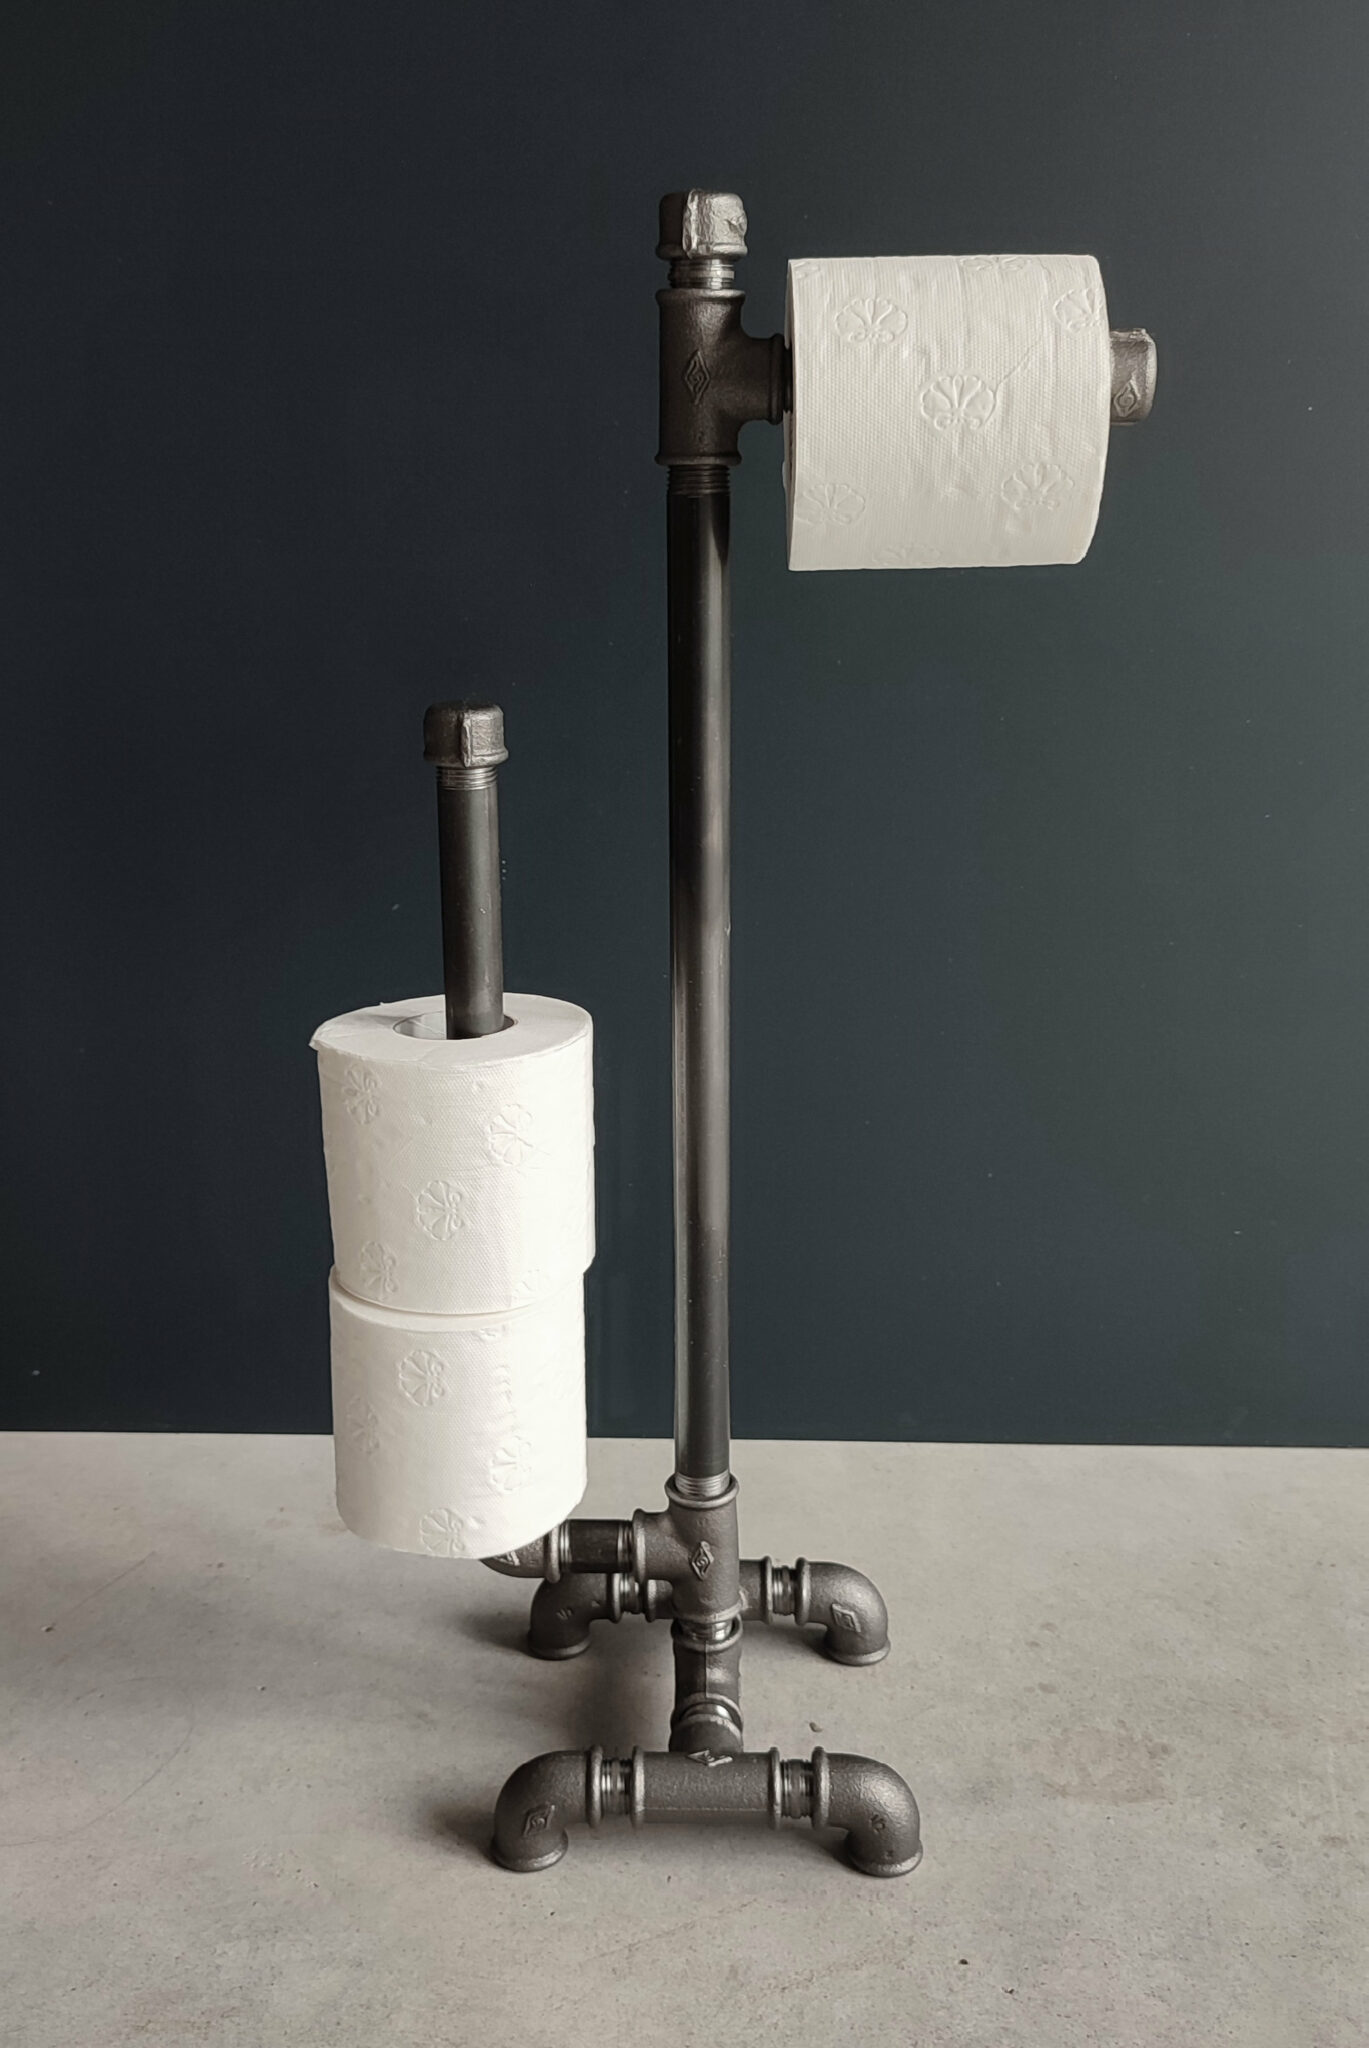 5 models of toilet paper holder to make industrial toilet